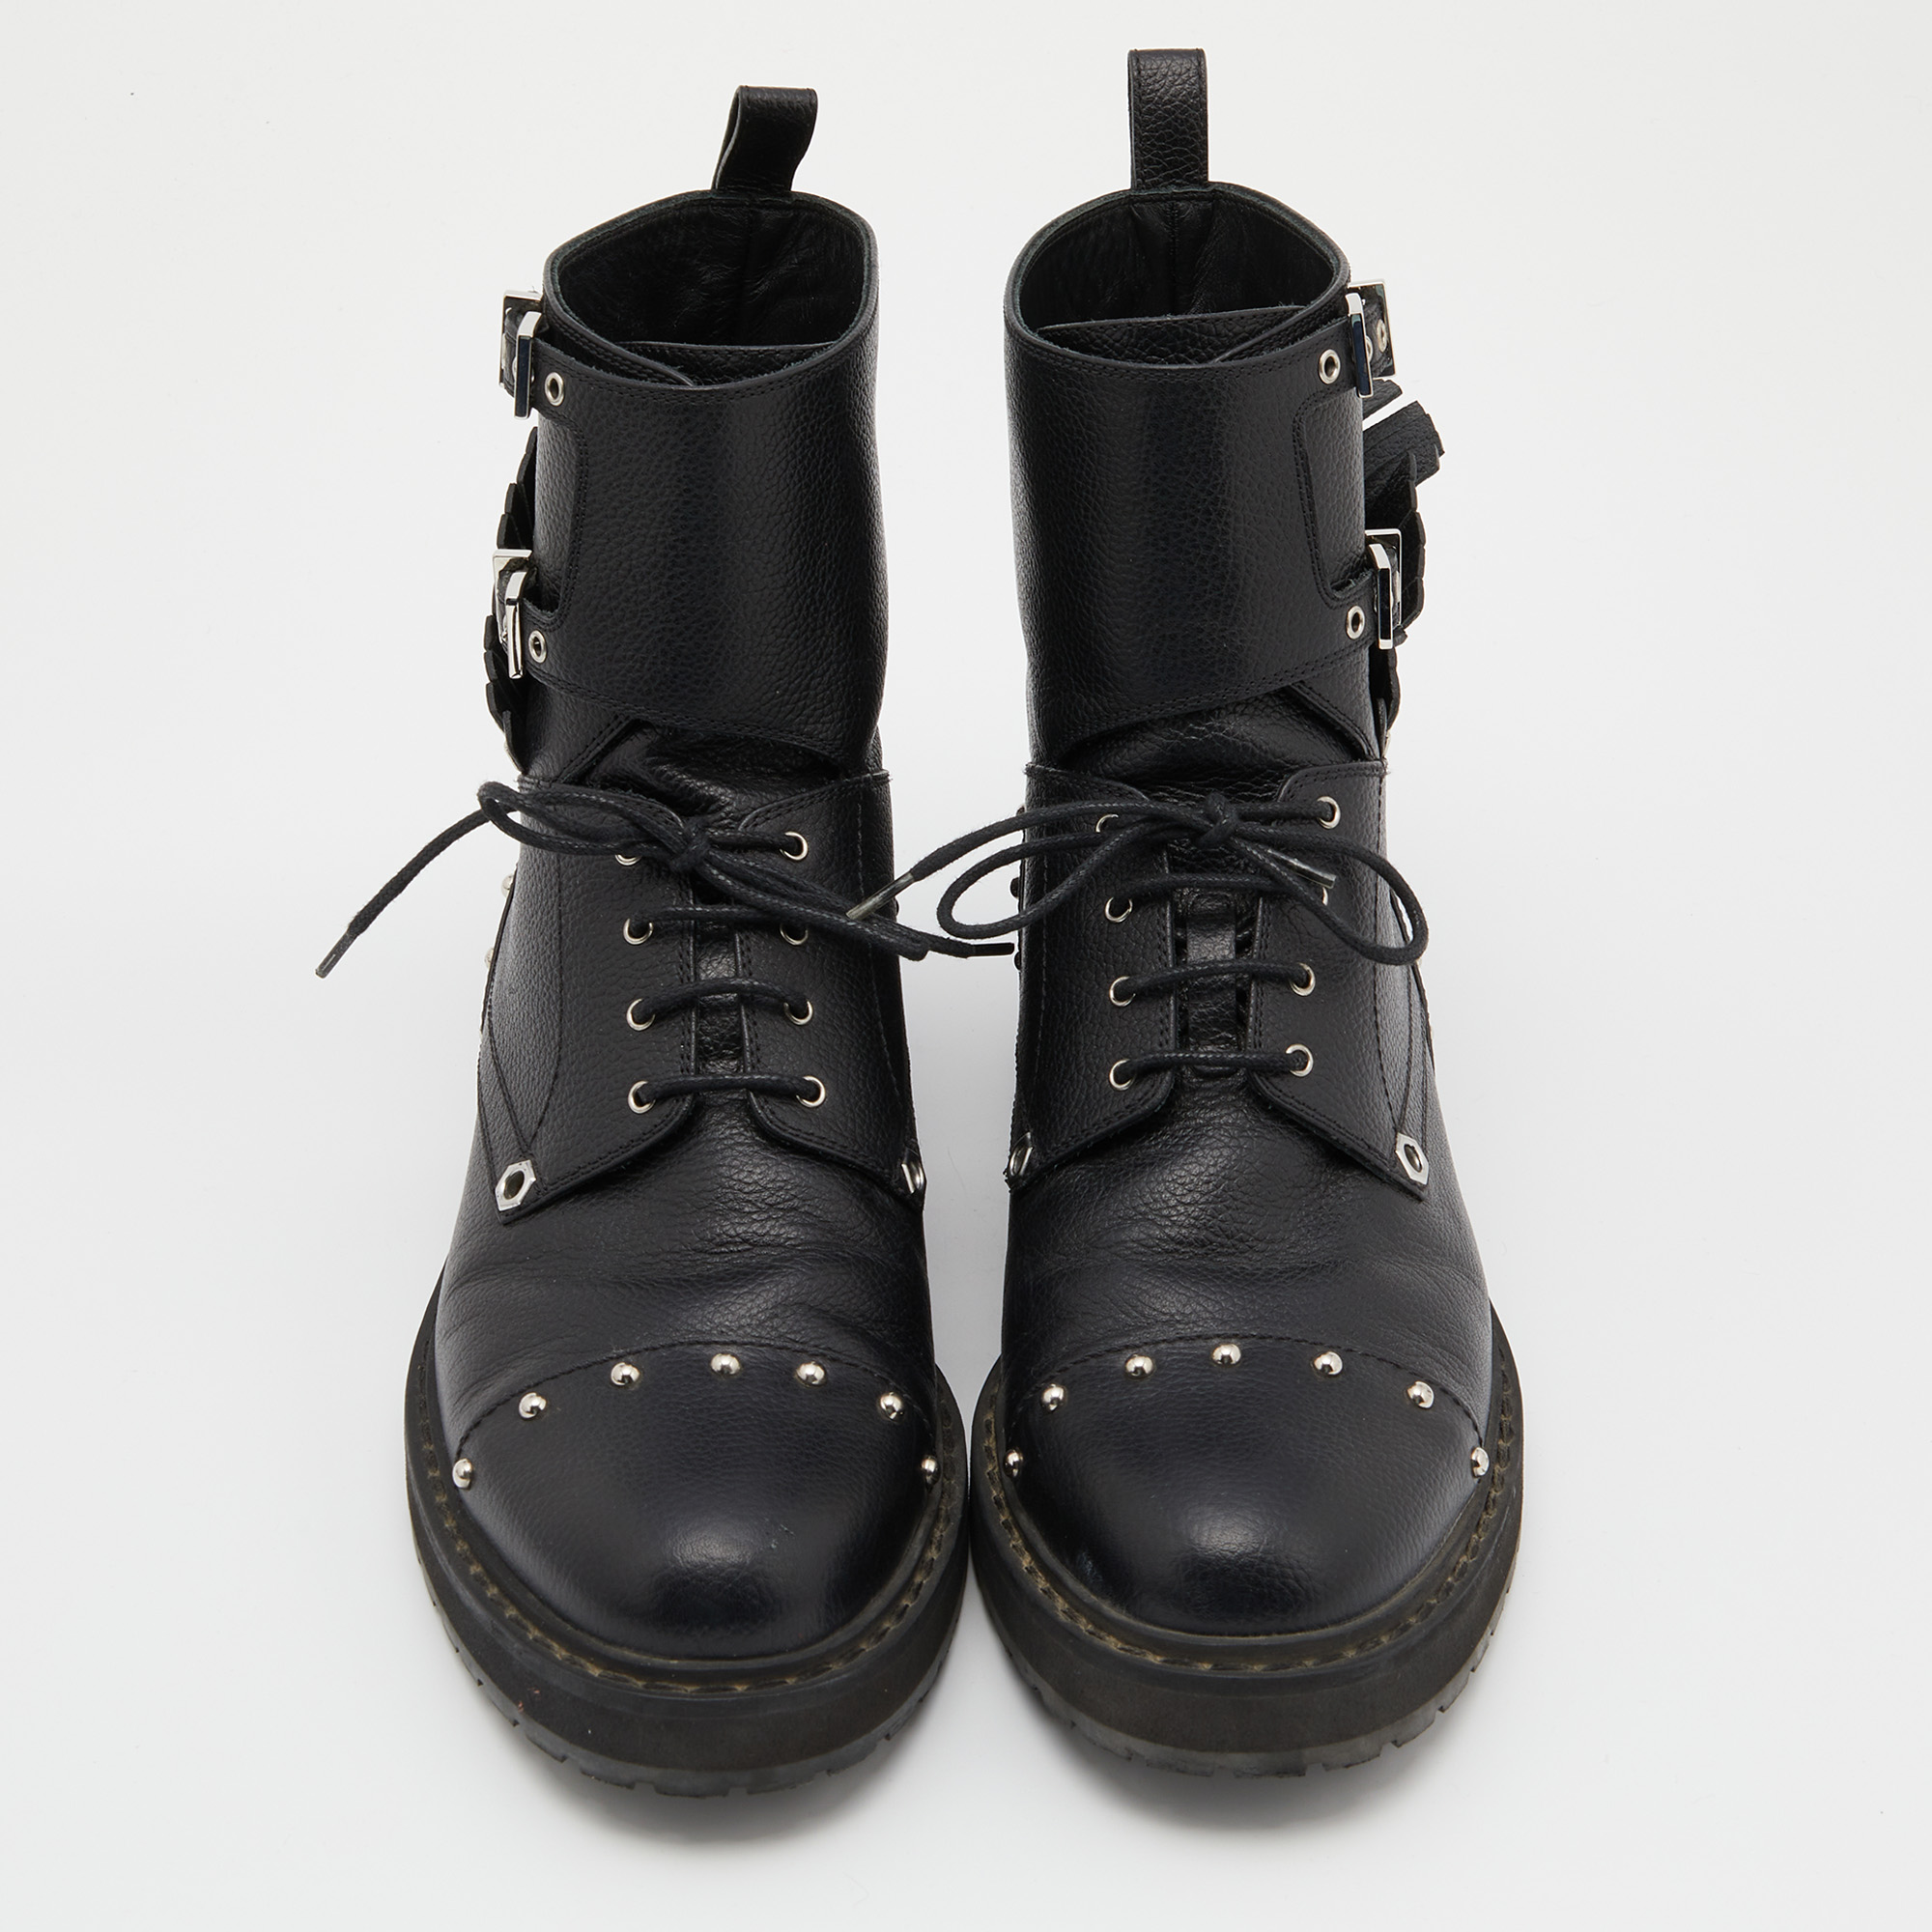 Fendi Black Leather Embellished Buckle Ankle Boots Size 39